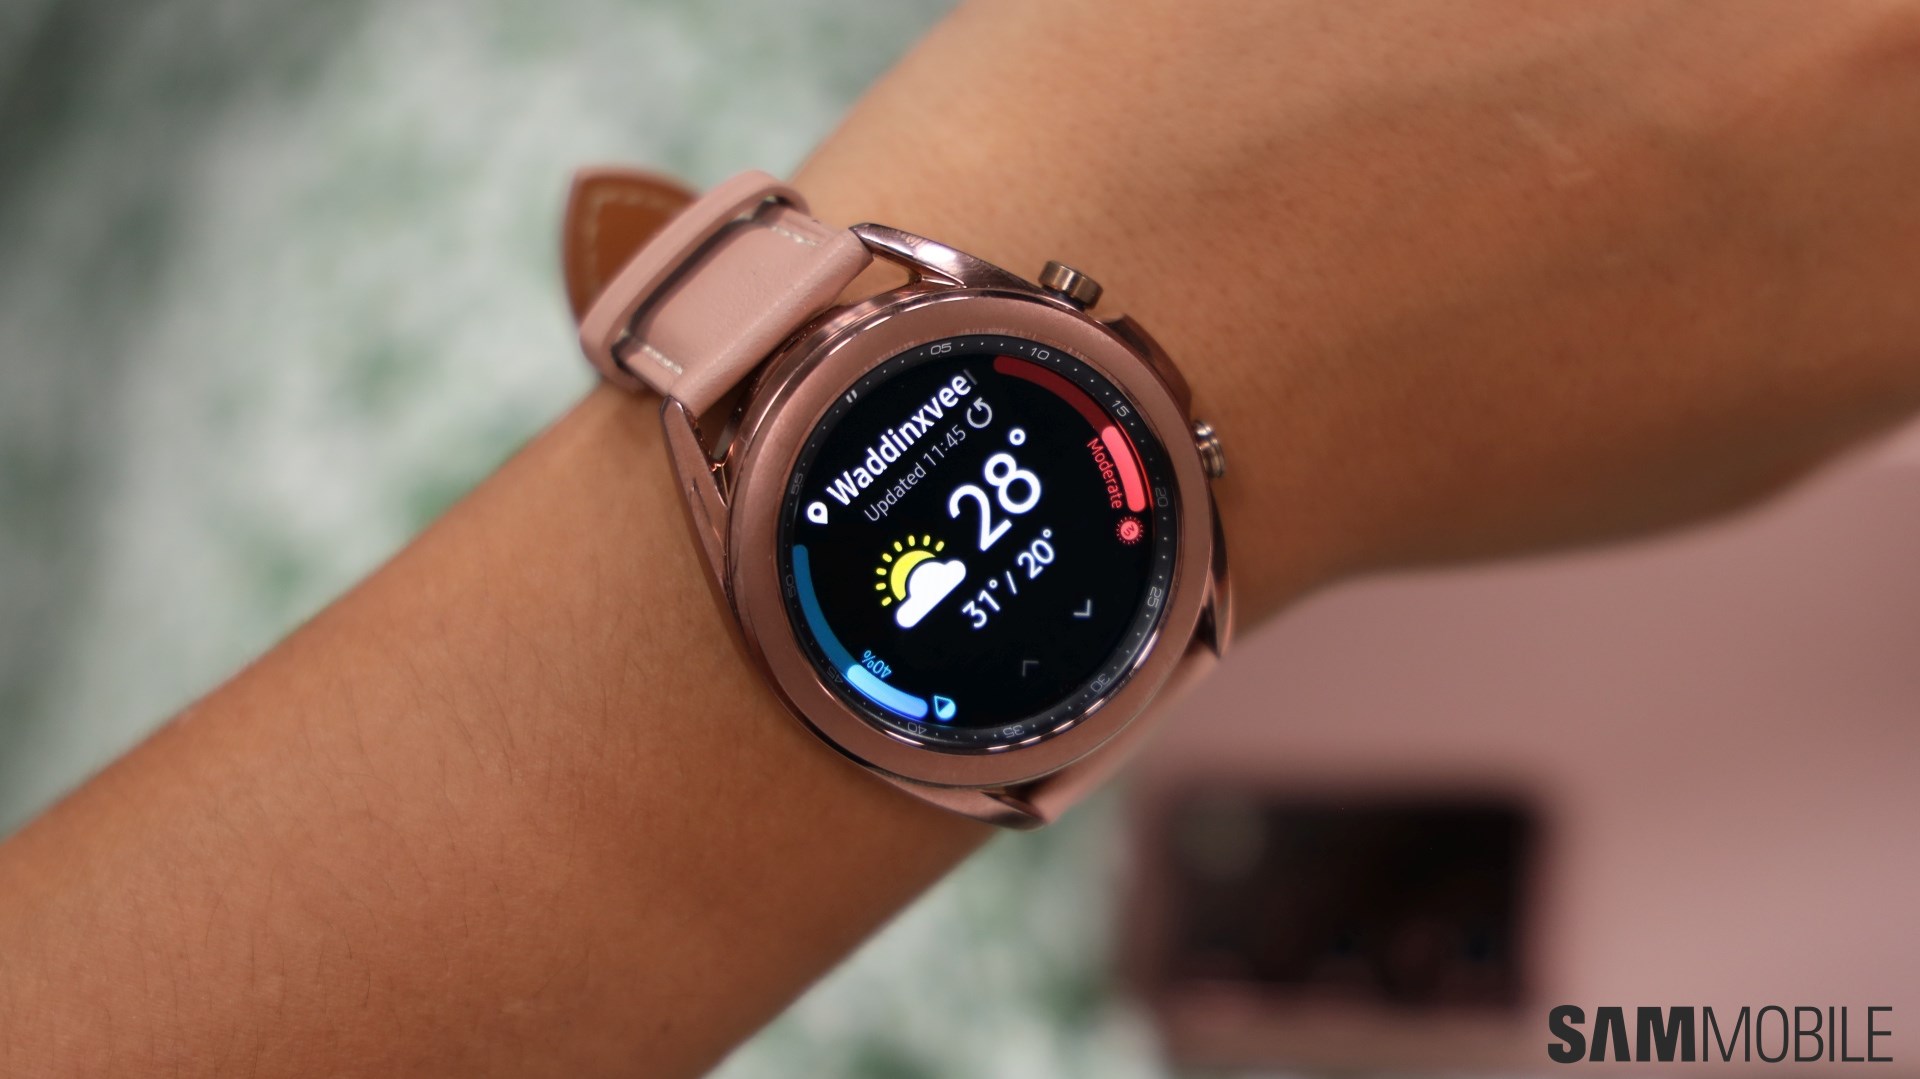 bescherming overdrijven Natuur New Samsung Galaxy Watch models for 2021 revealed - SamMobile